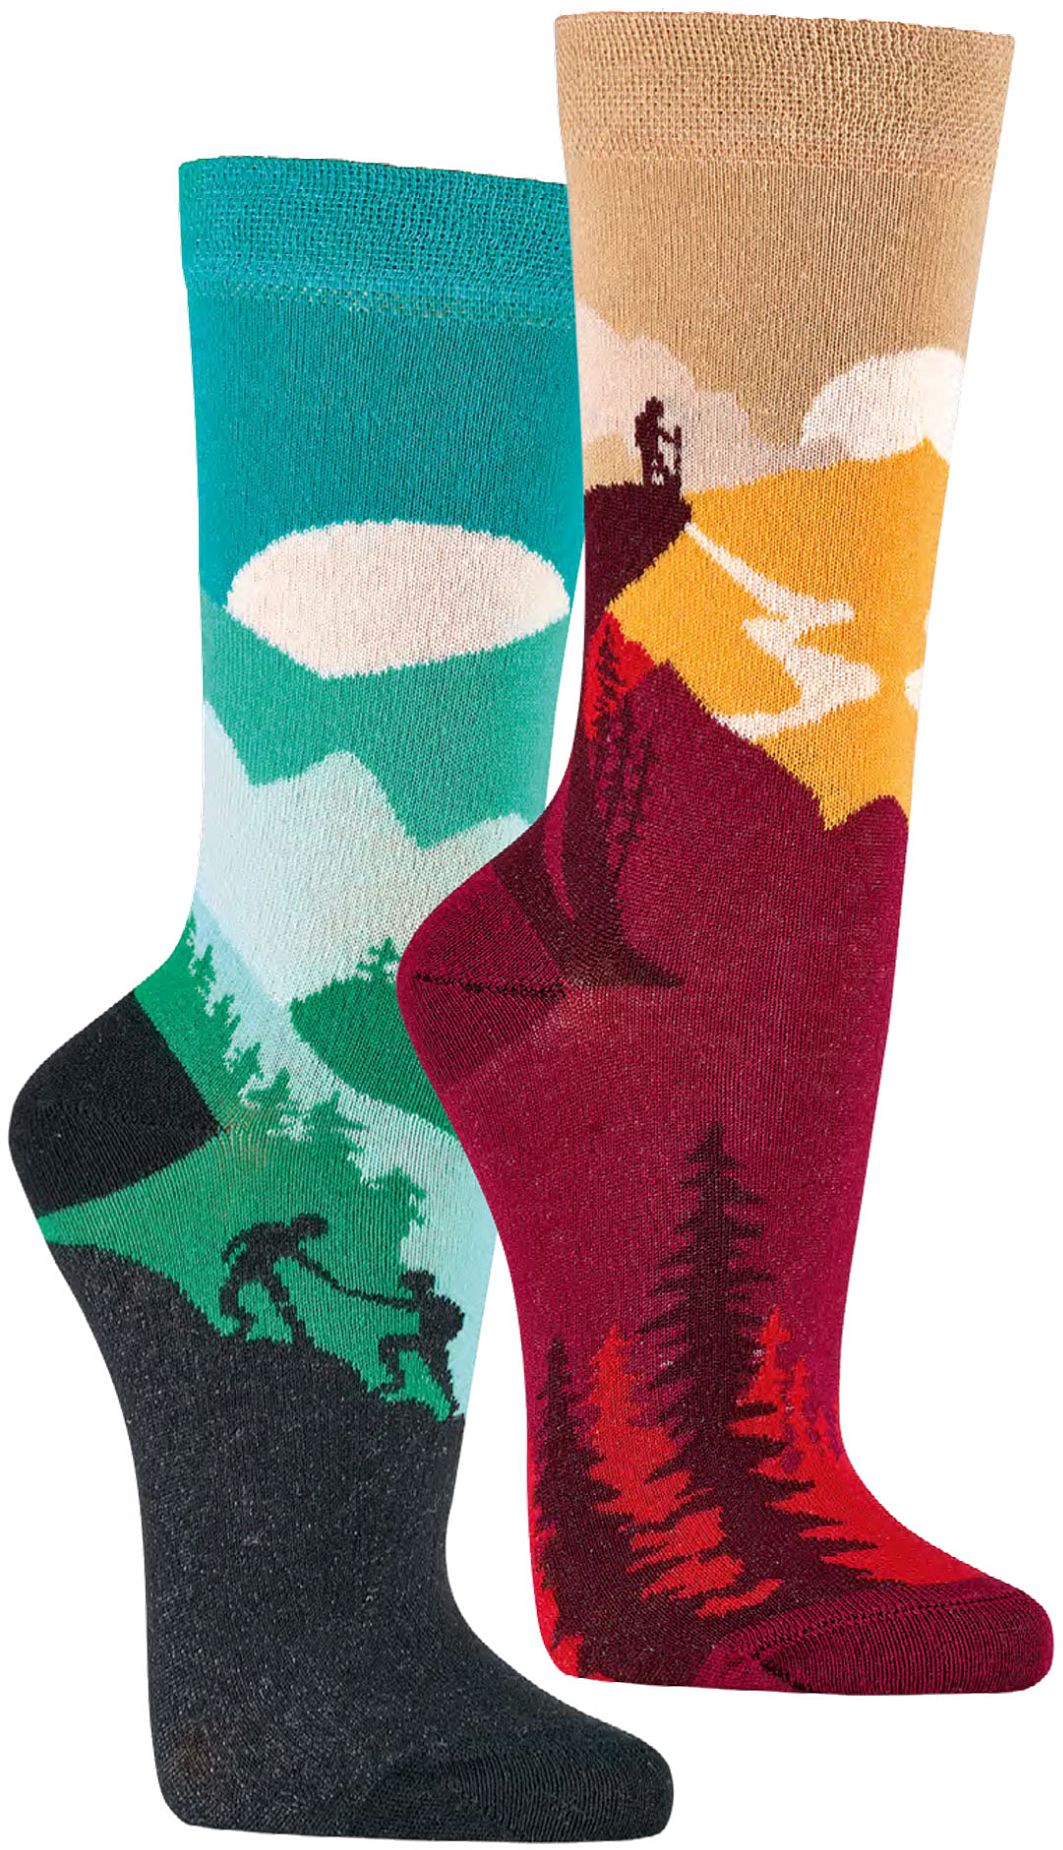 BERGGLÜCK Witzige Socken als Geschenkidee oder zum Selbertragen 2er- Bündel 